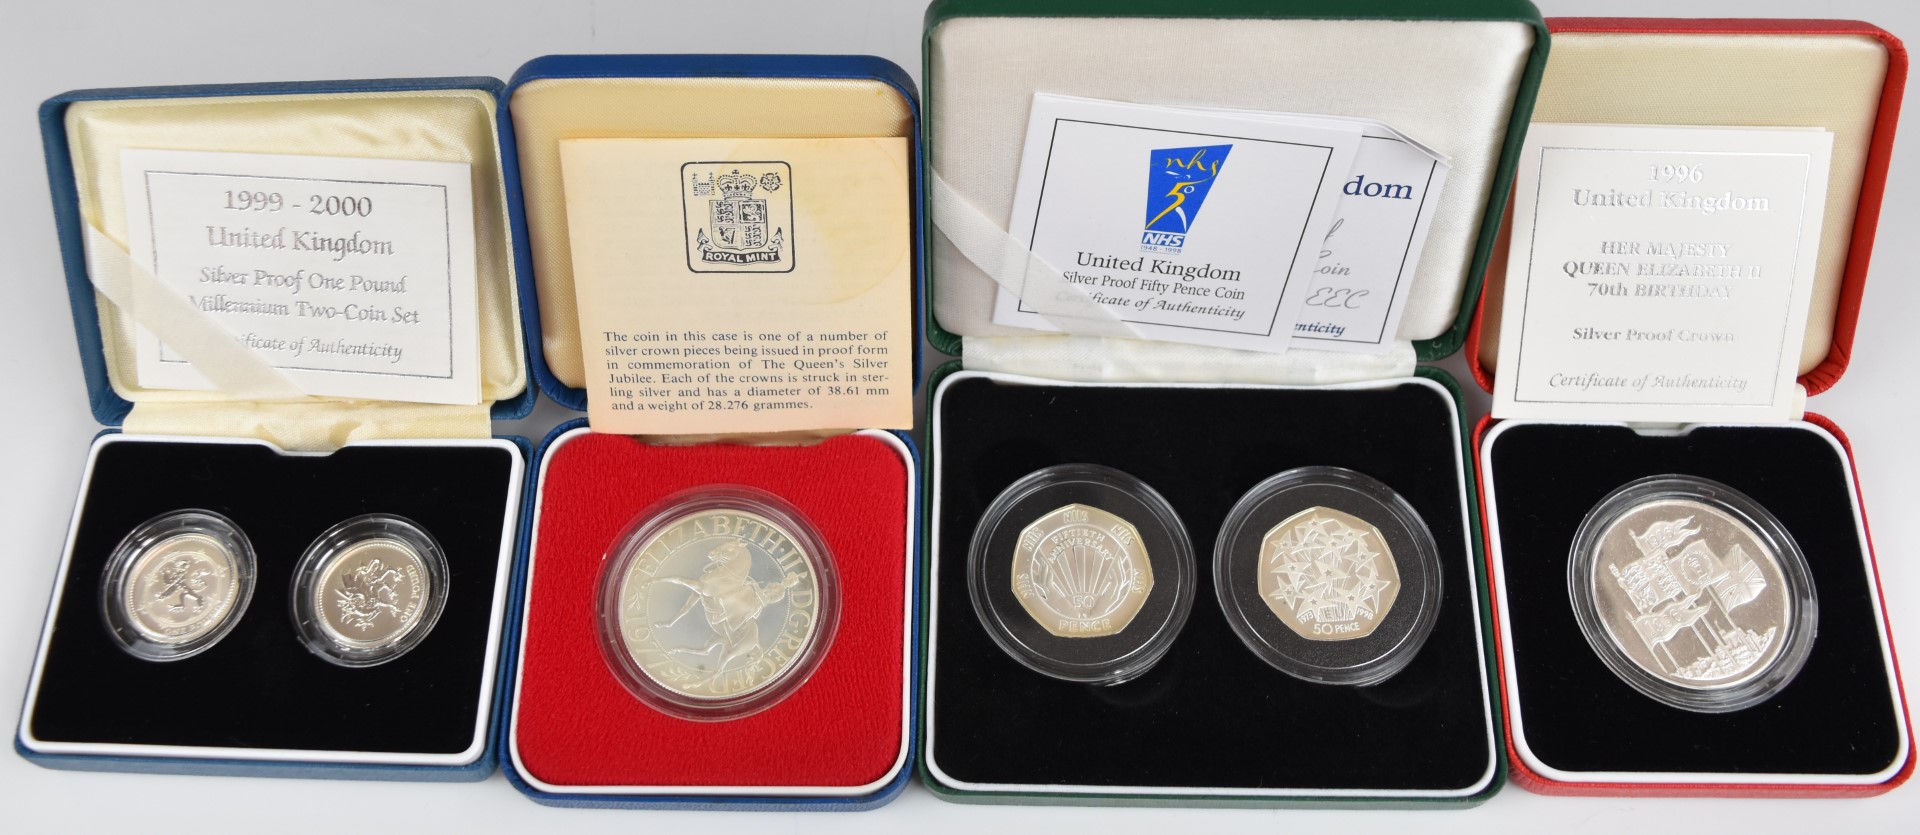 Six Royal Mint commemorative silver proof coins comprising a 1999 - 2000 set of two Millennium £1